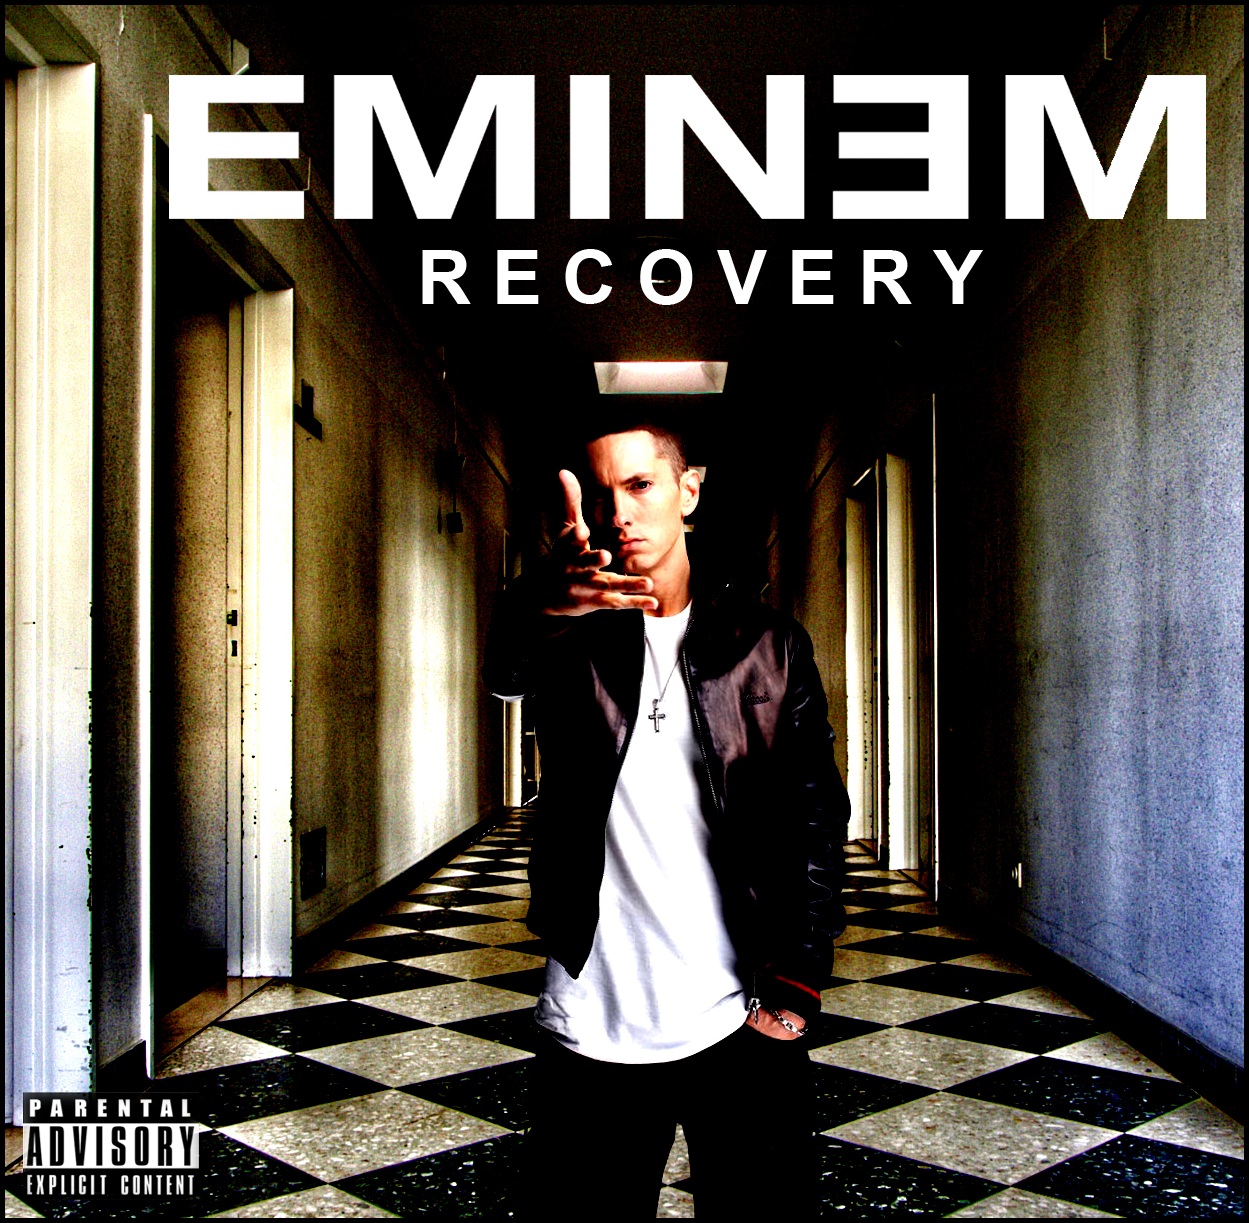 http://4.bp.blogspot.com/-oPtinKcDBRs/Tts7X0sSbLI/AAAAAAAAFTU/-BRbAqICeUU/s1600/Eminem+Recovery%252C+Eminem+-+Love+The+Way+You+Lie+feat.+Rihanna+Lyrics%252C+Mp3+%2526+Video+Song+Download+Free+-+Lyricspassion.blogspot.com.jpg